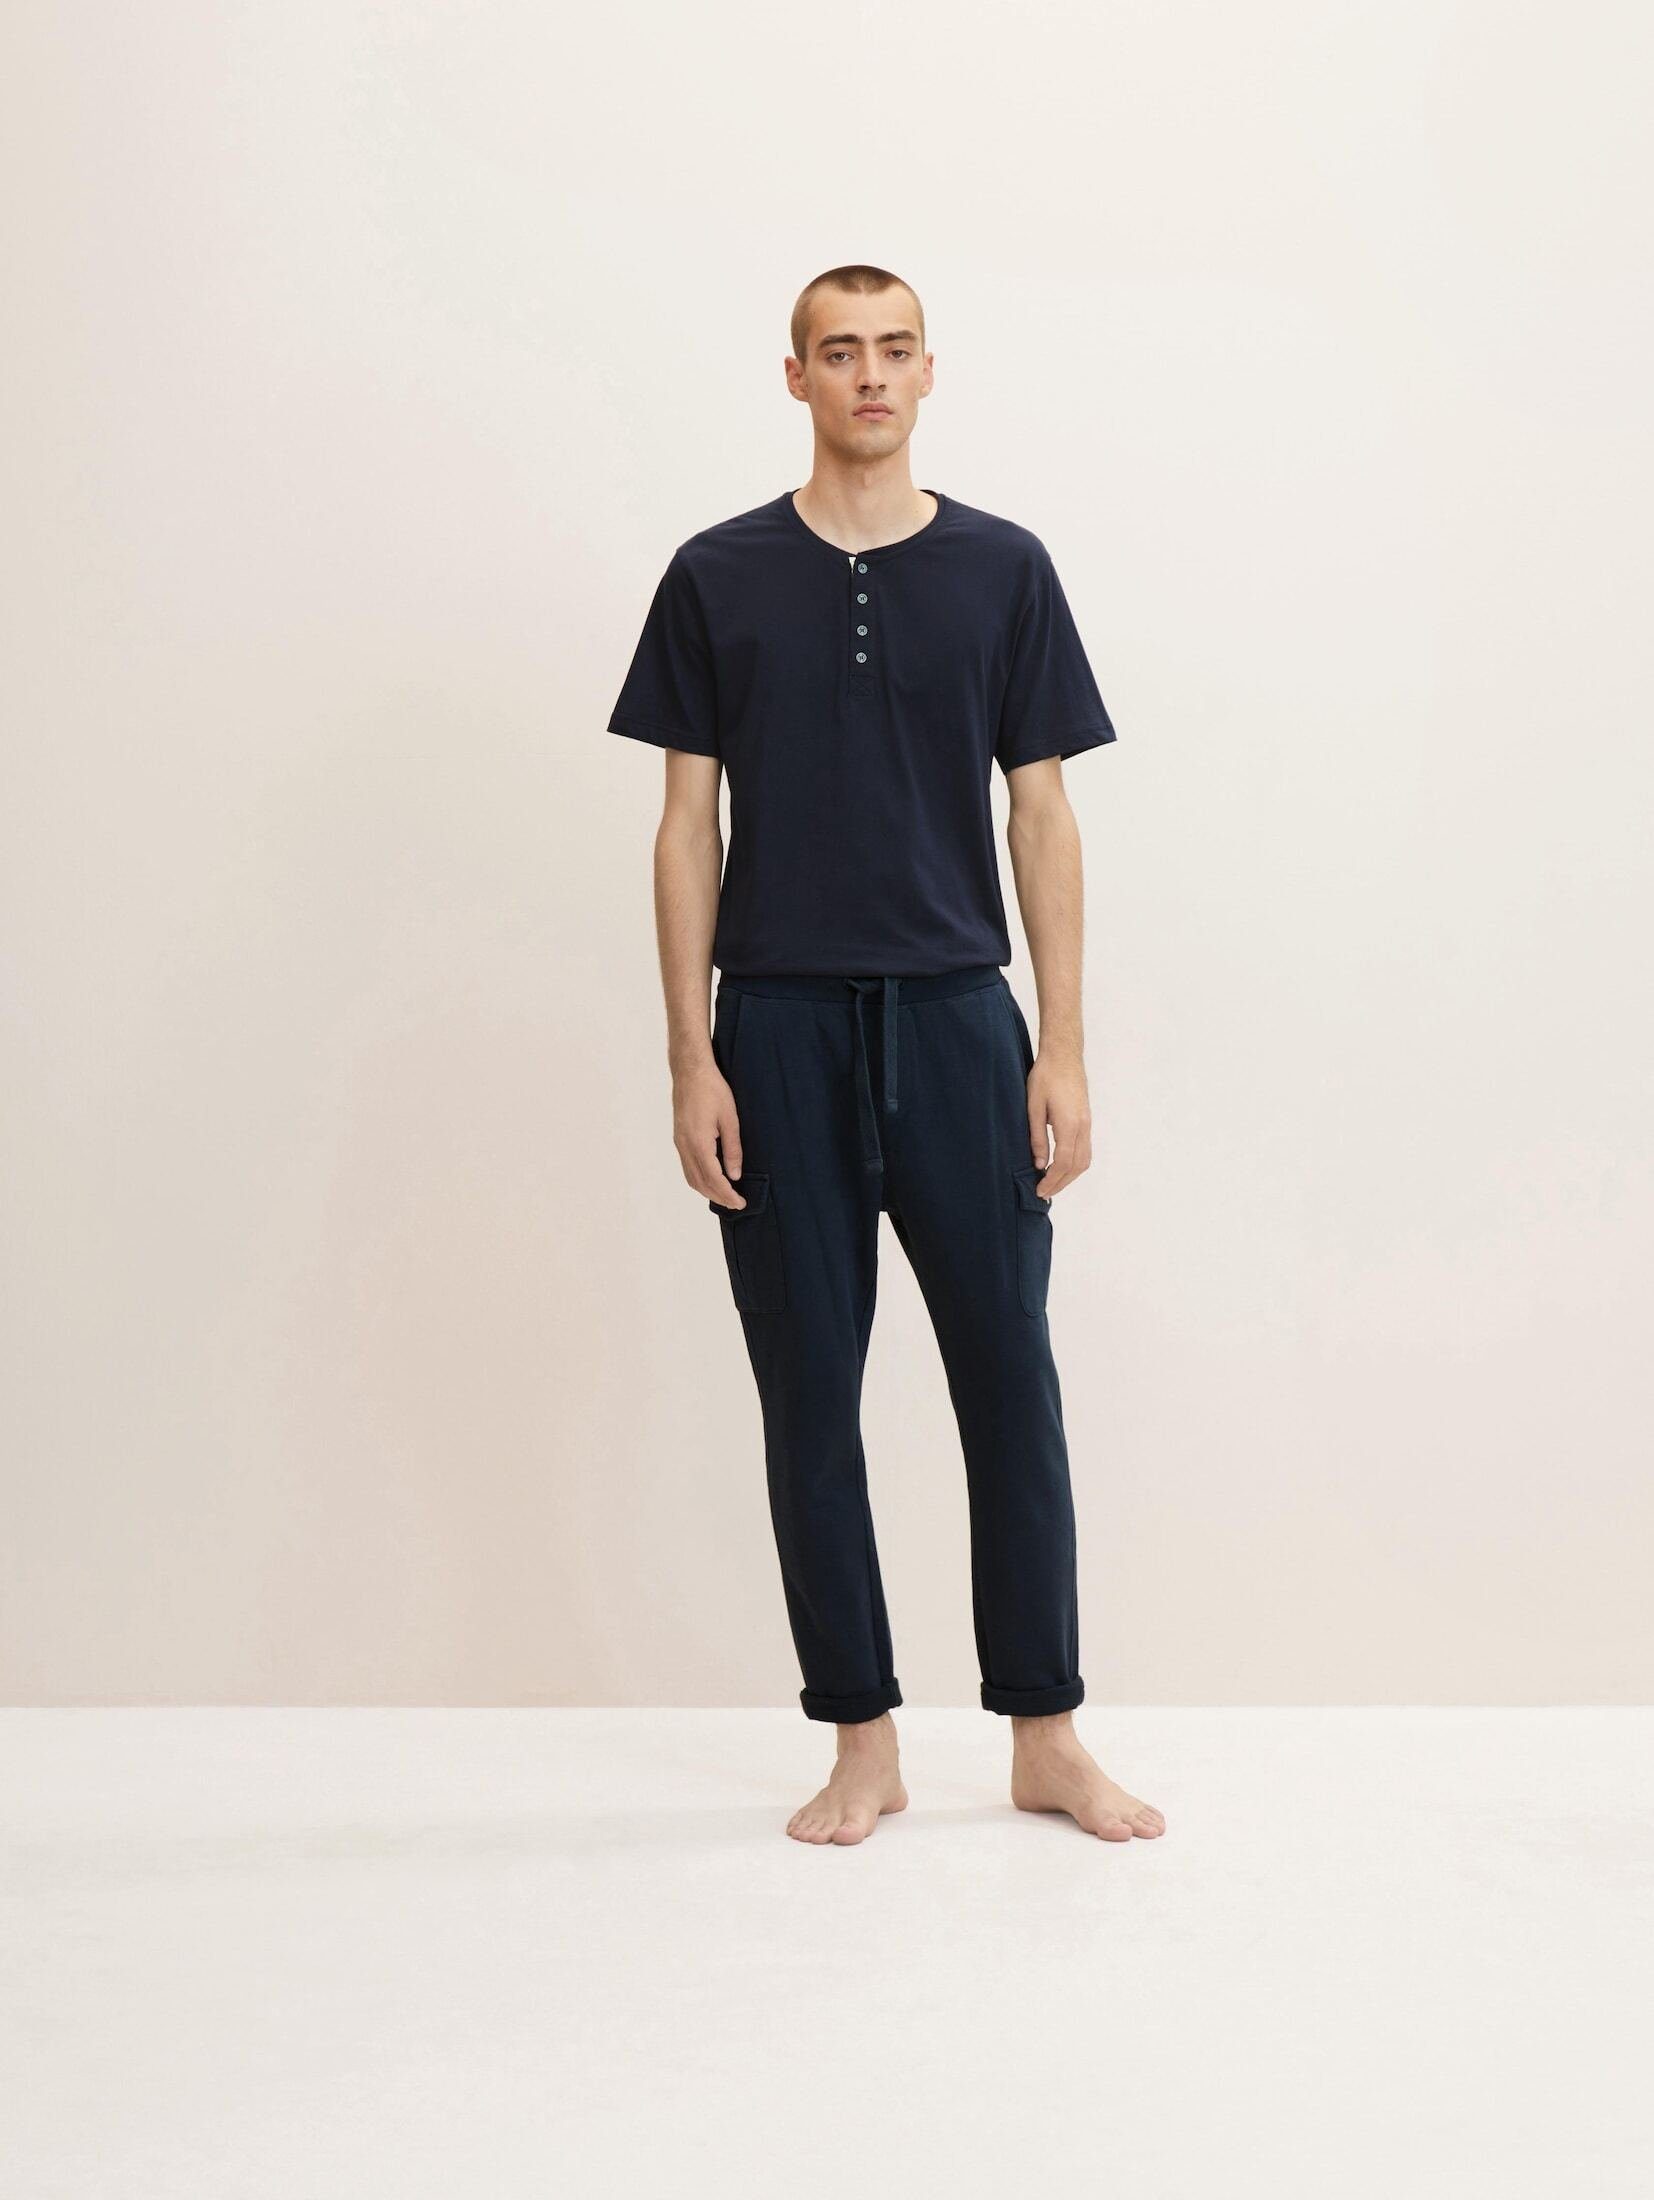 TOM blau-dunkel-uni Pyjamaoberteil TAILOR T-Shirt Pyjama